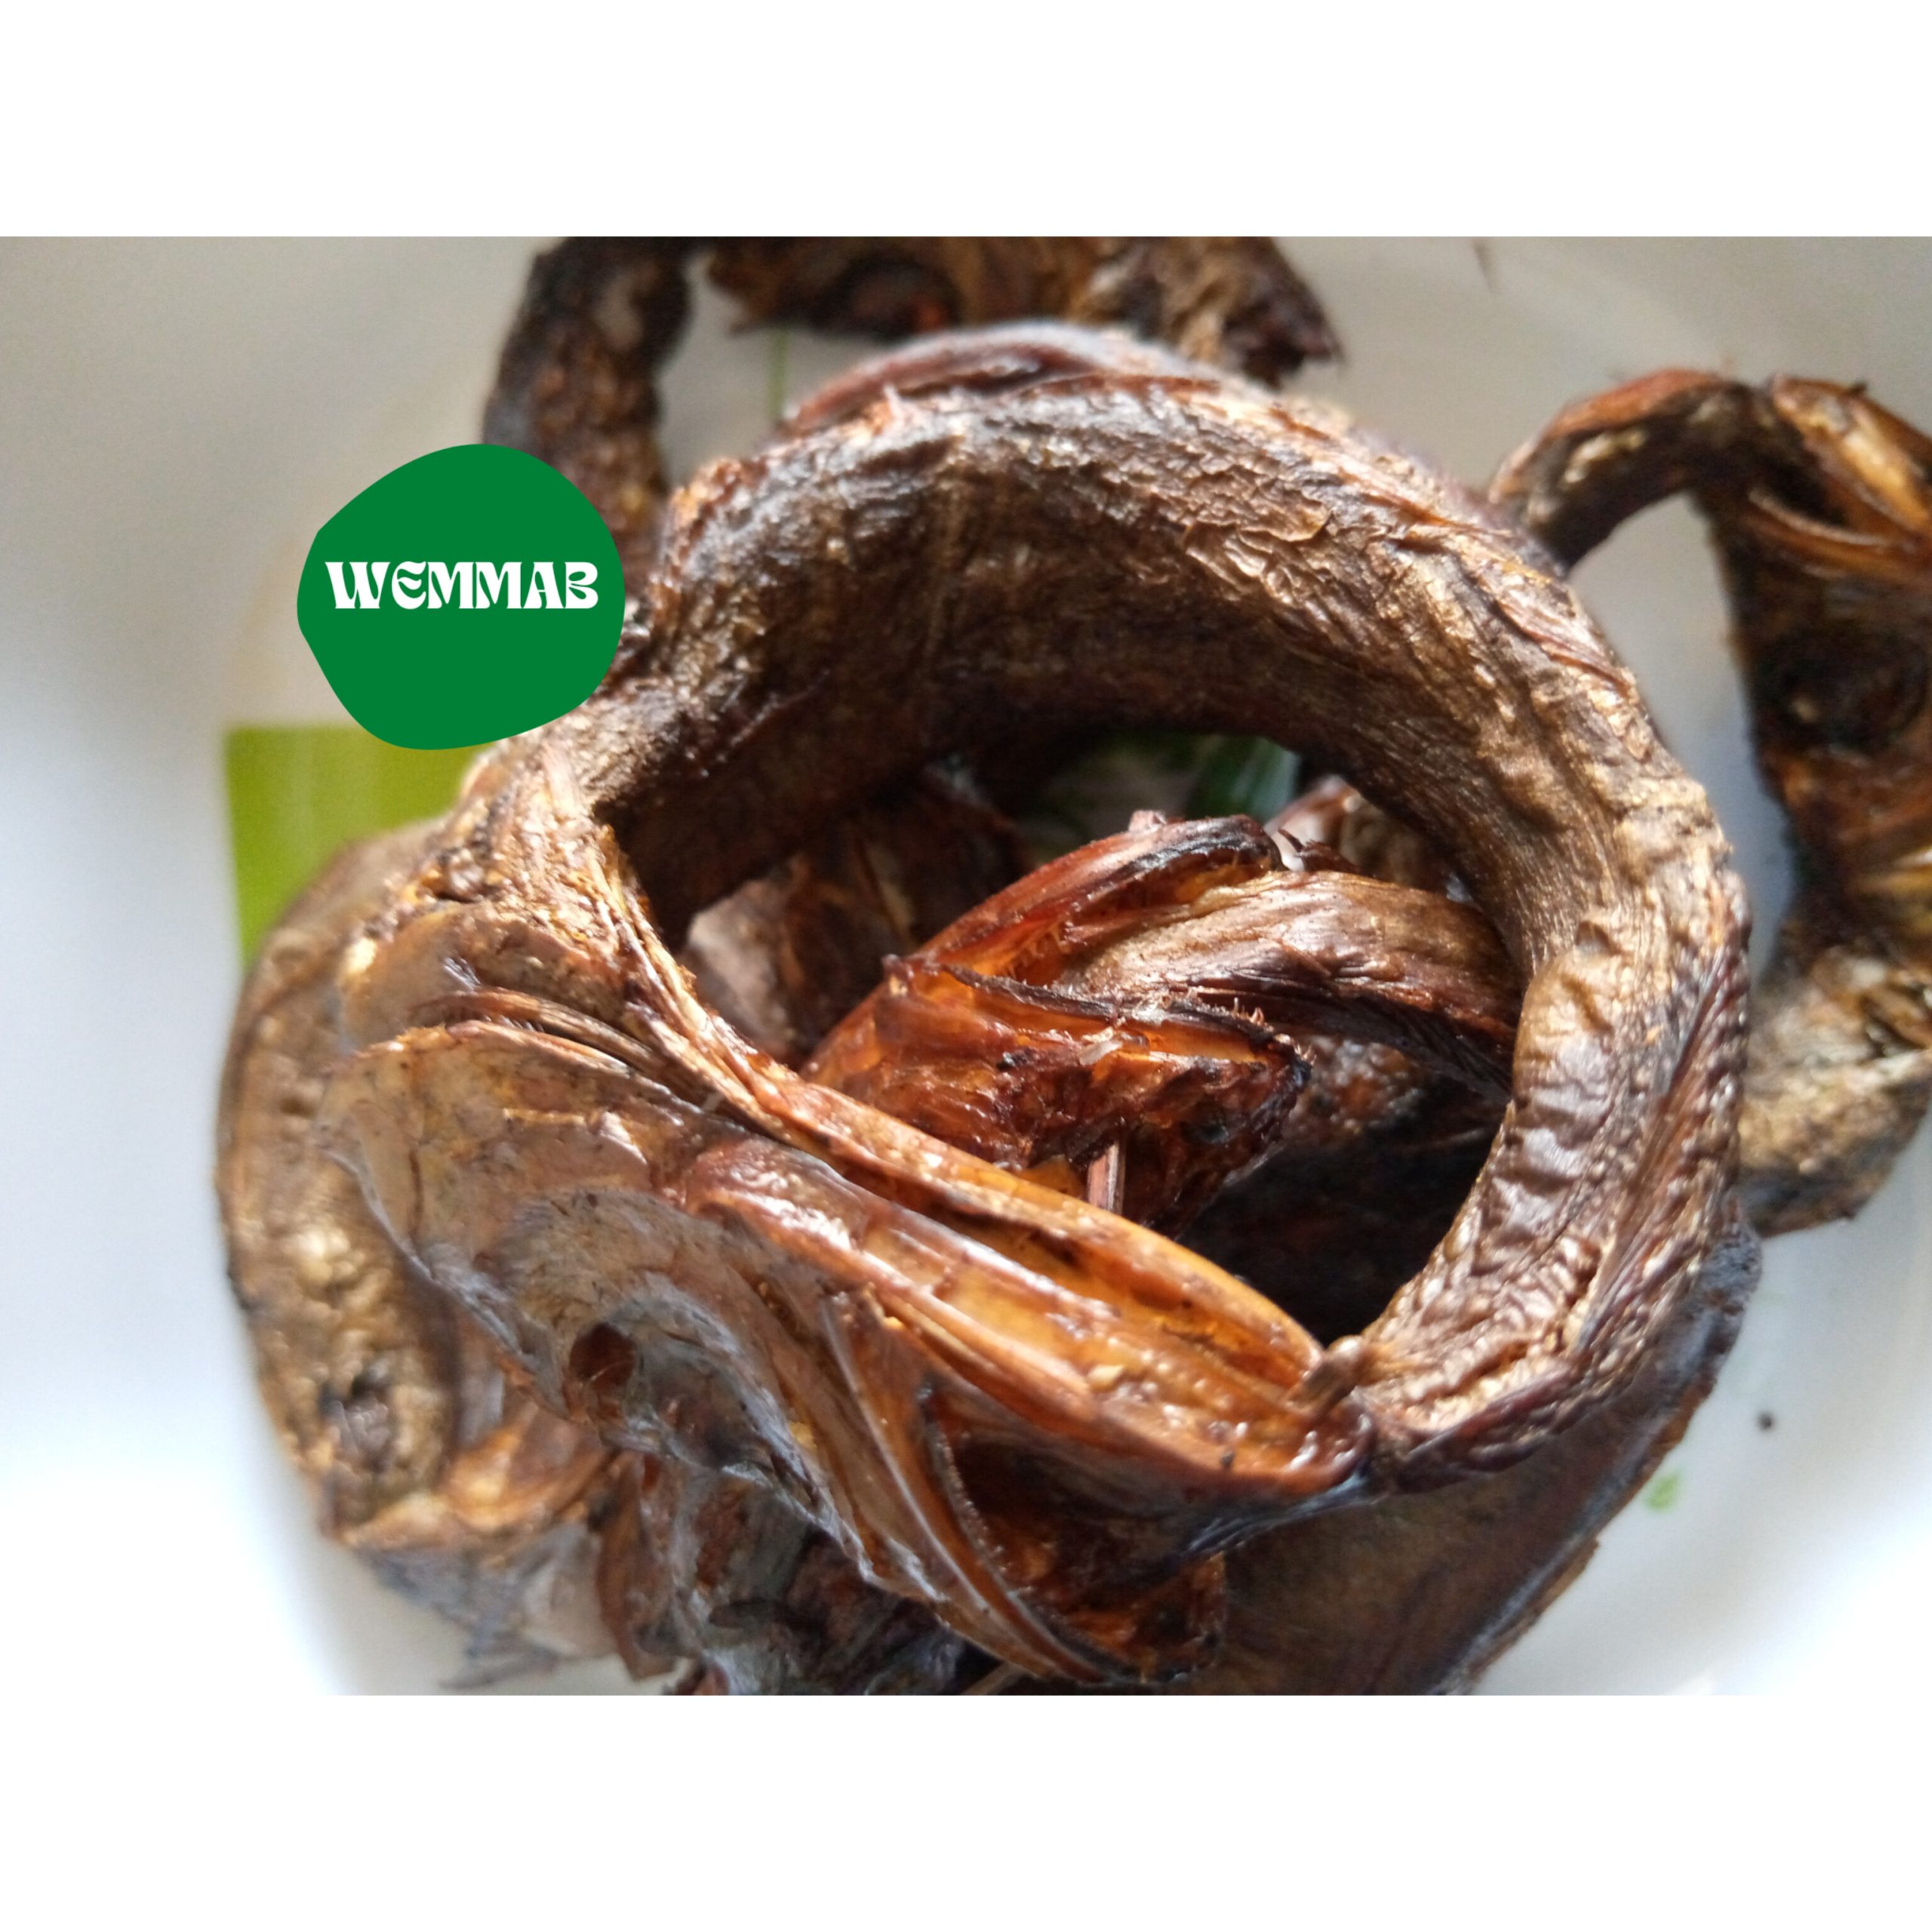 Smoked panla or hake fish consumption in nigeria